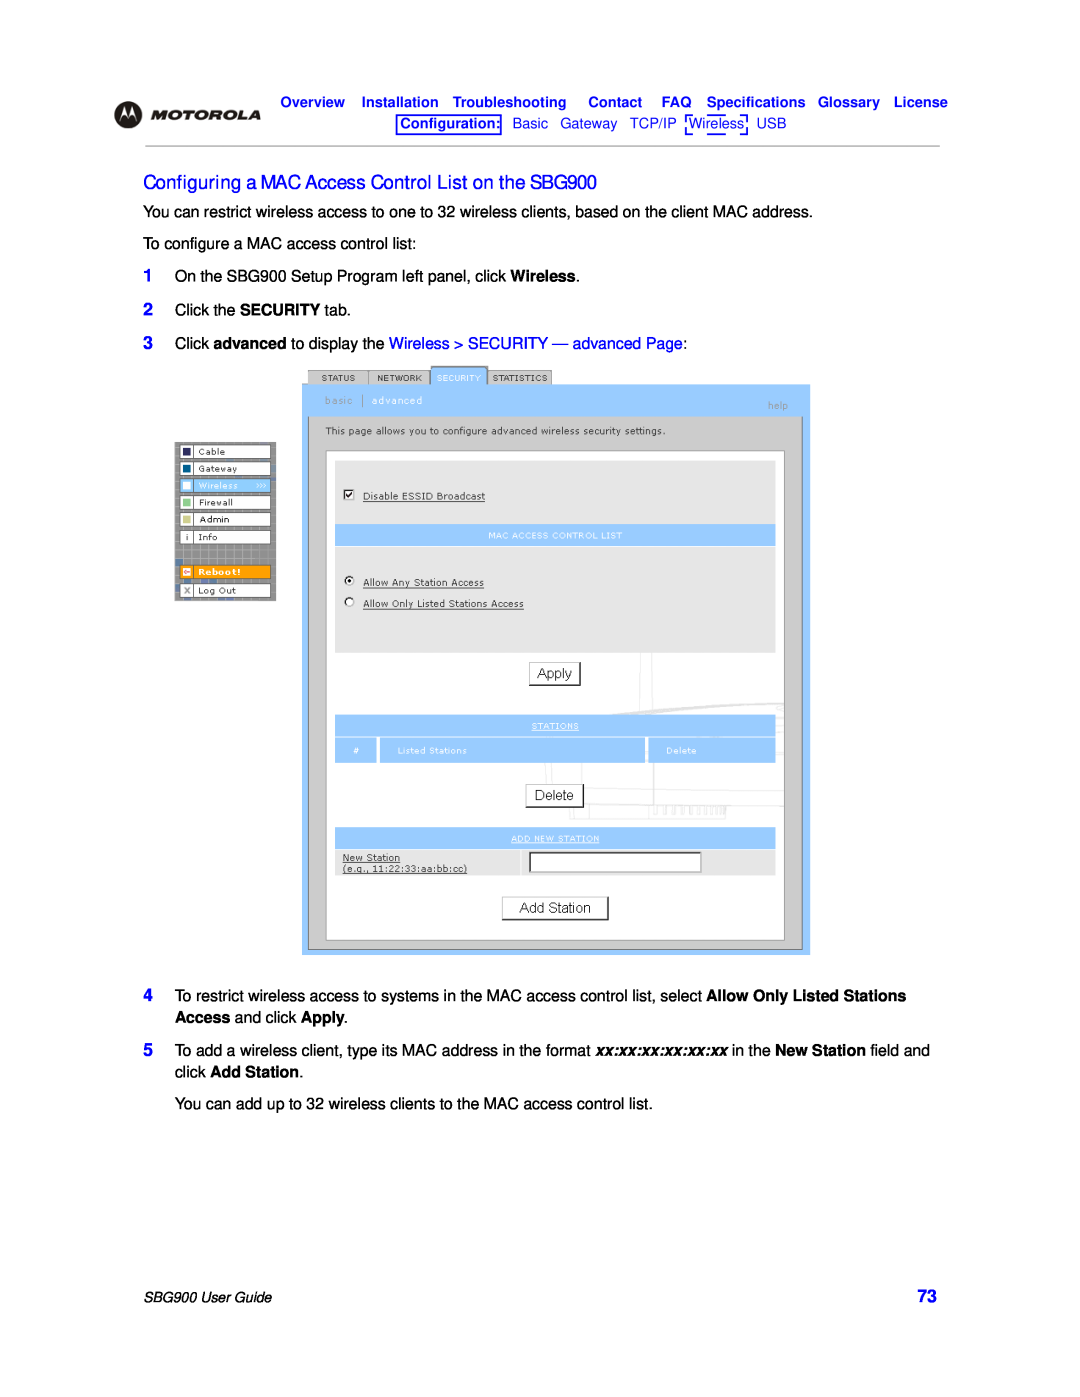 Motorola manual Configuring a MAC Access Control List on the SBG900 